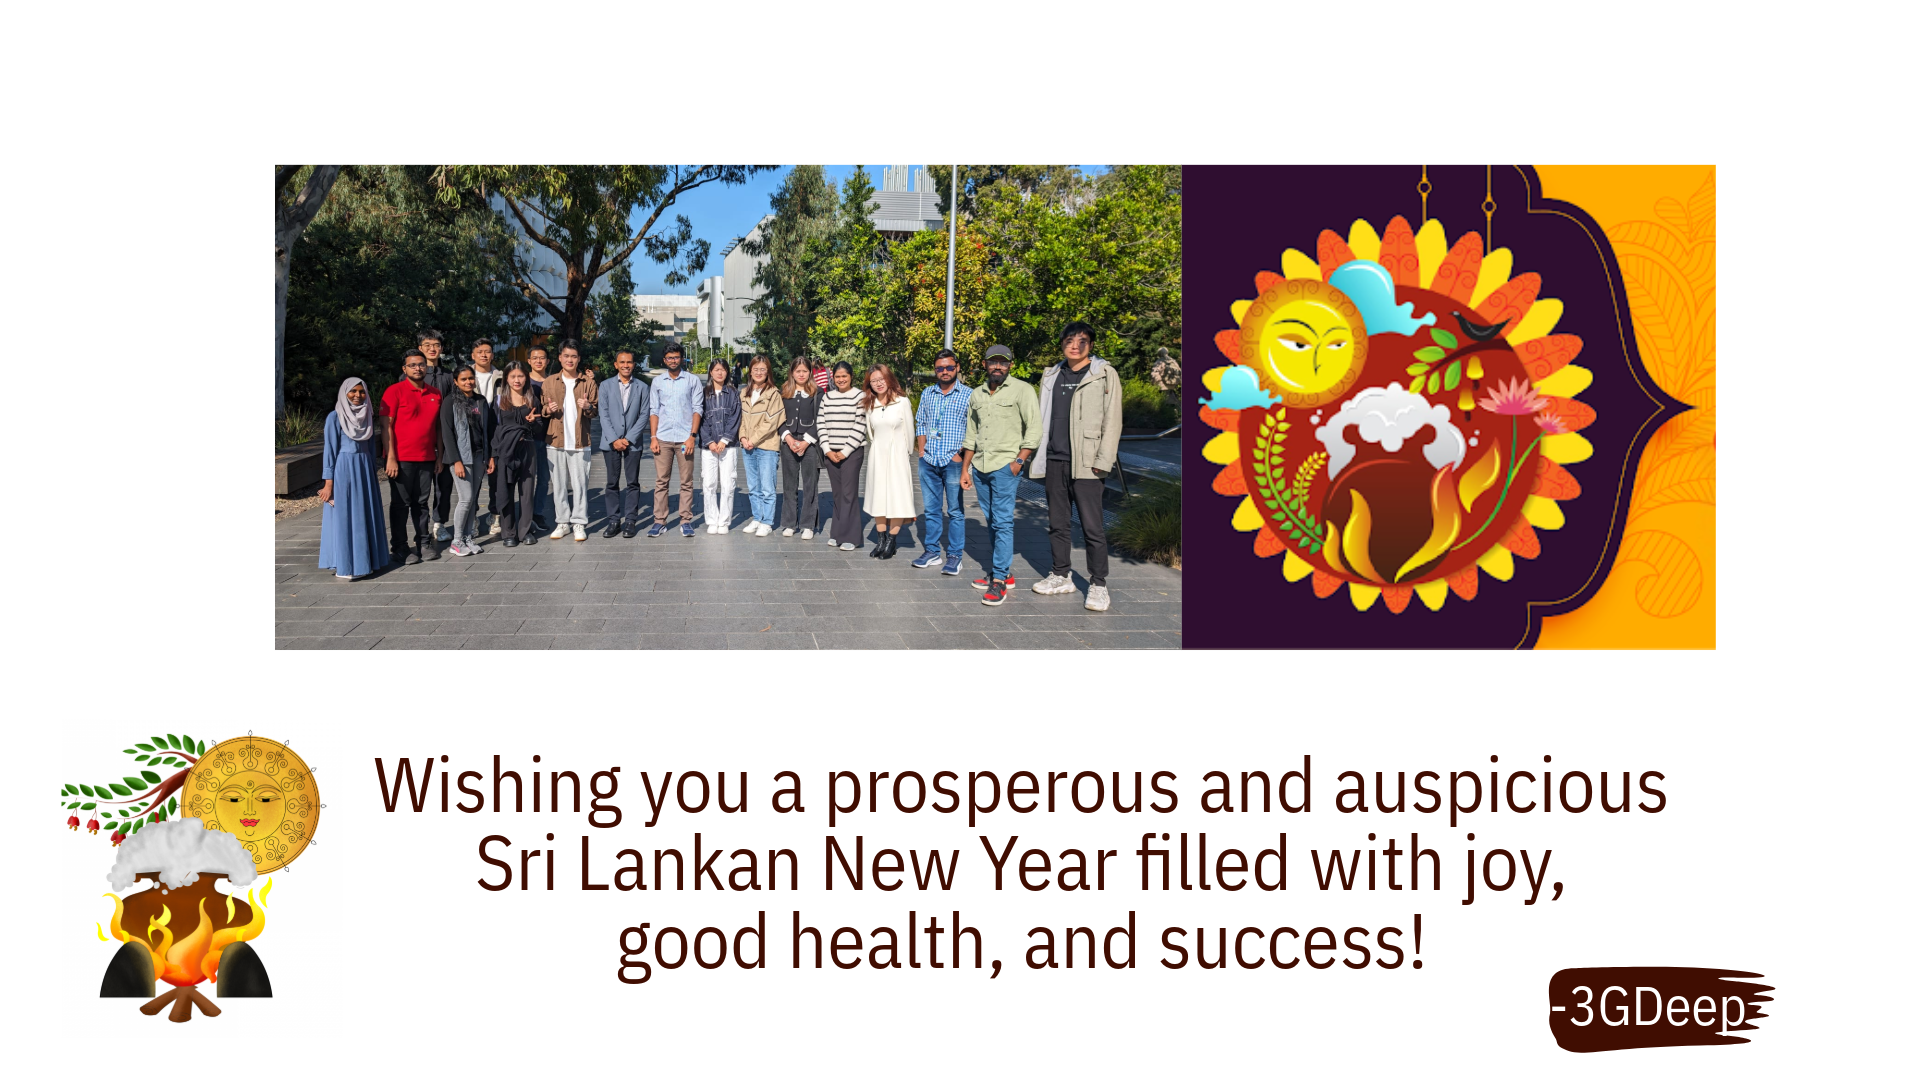 Happy Sri Lankan New Year!